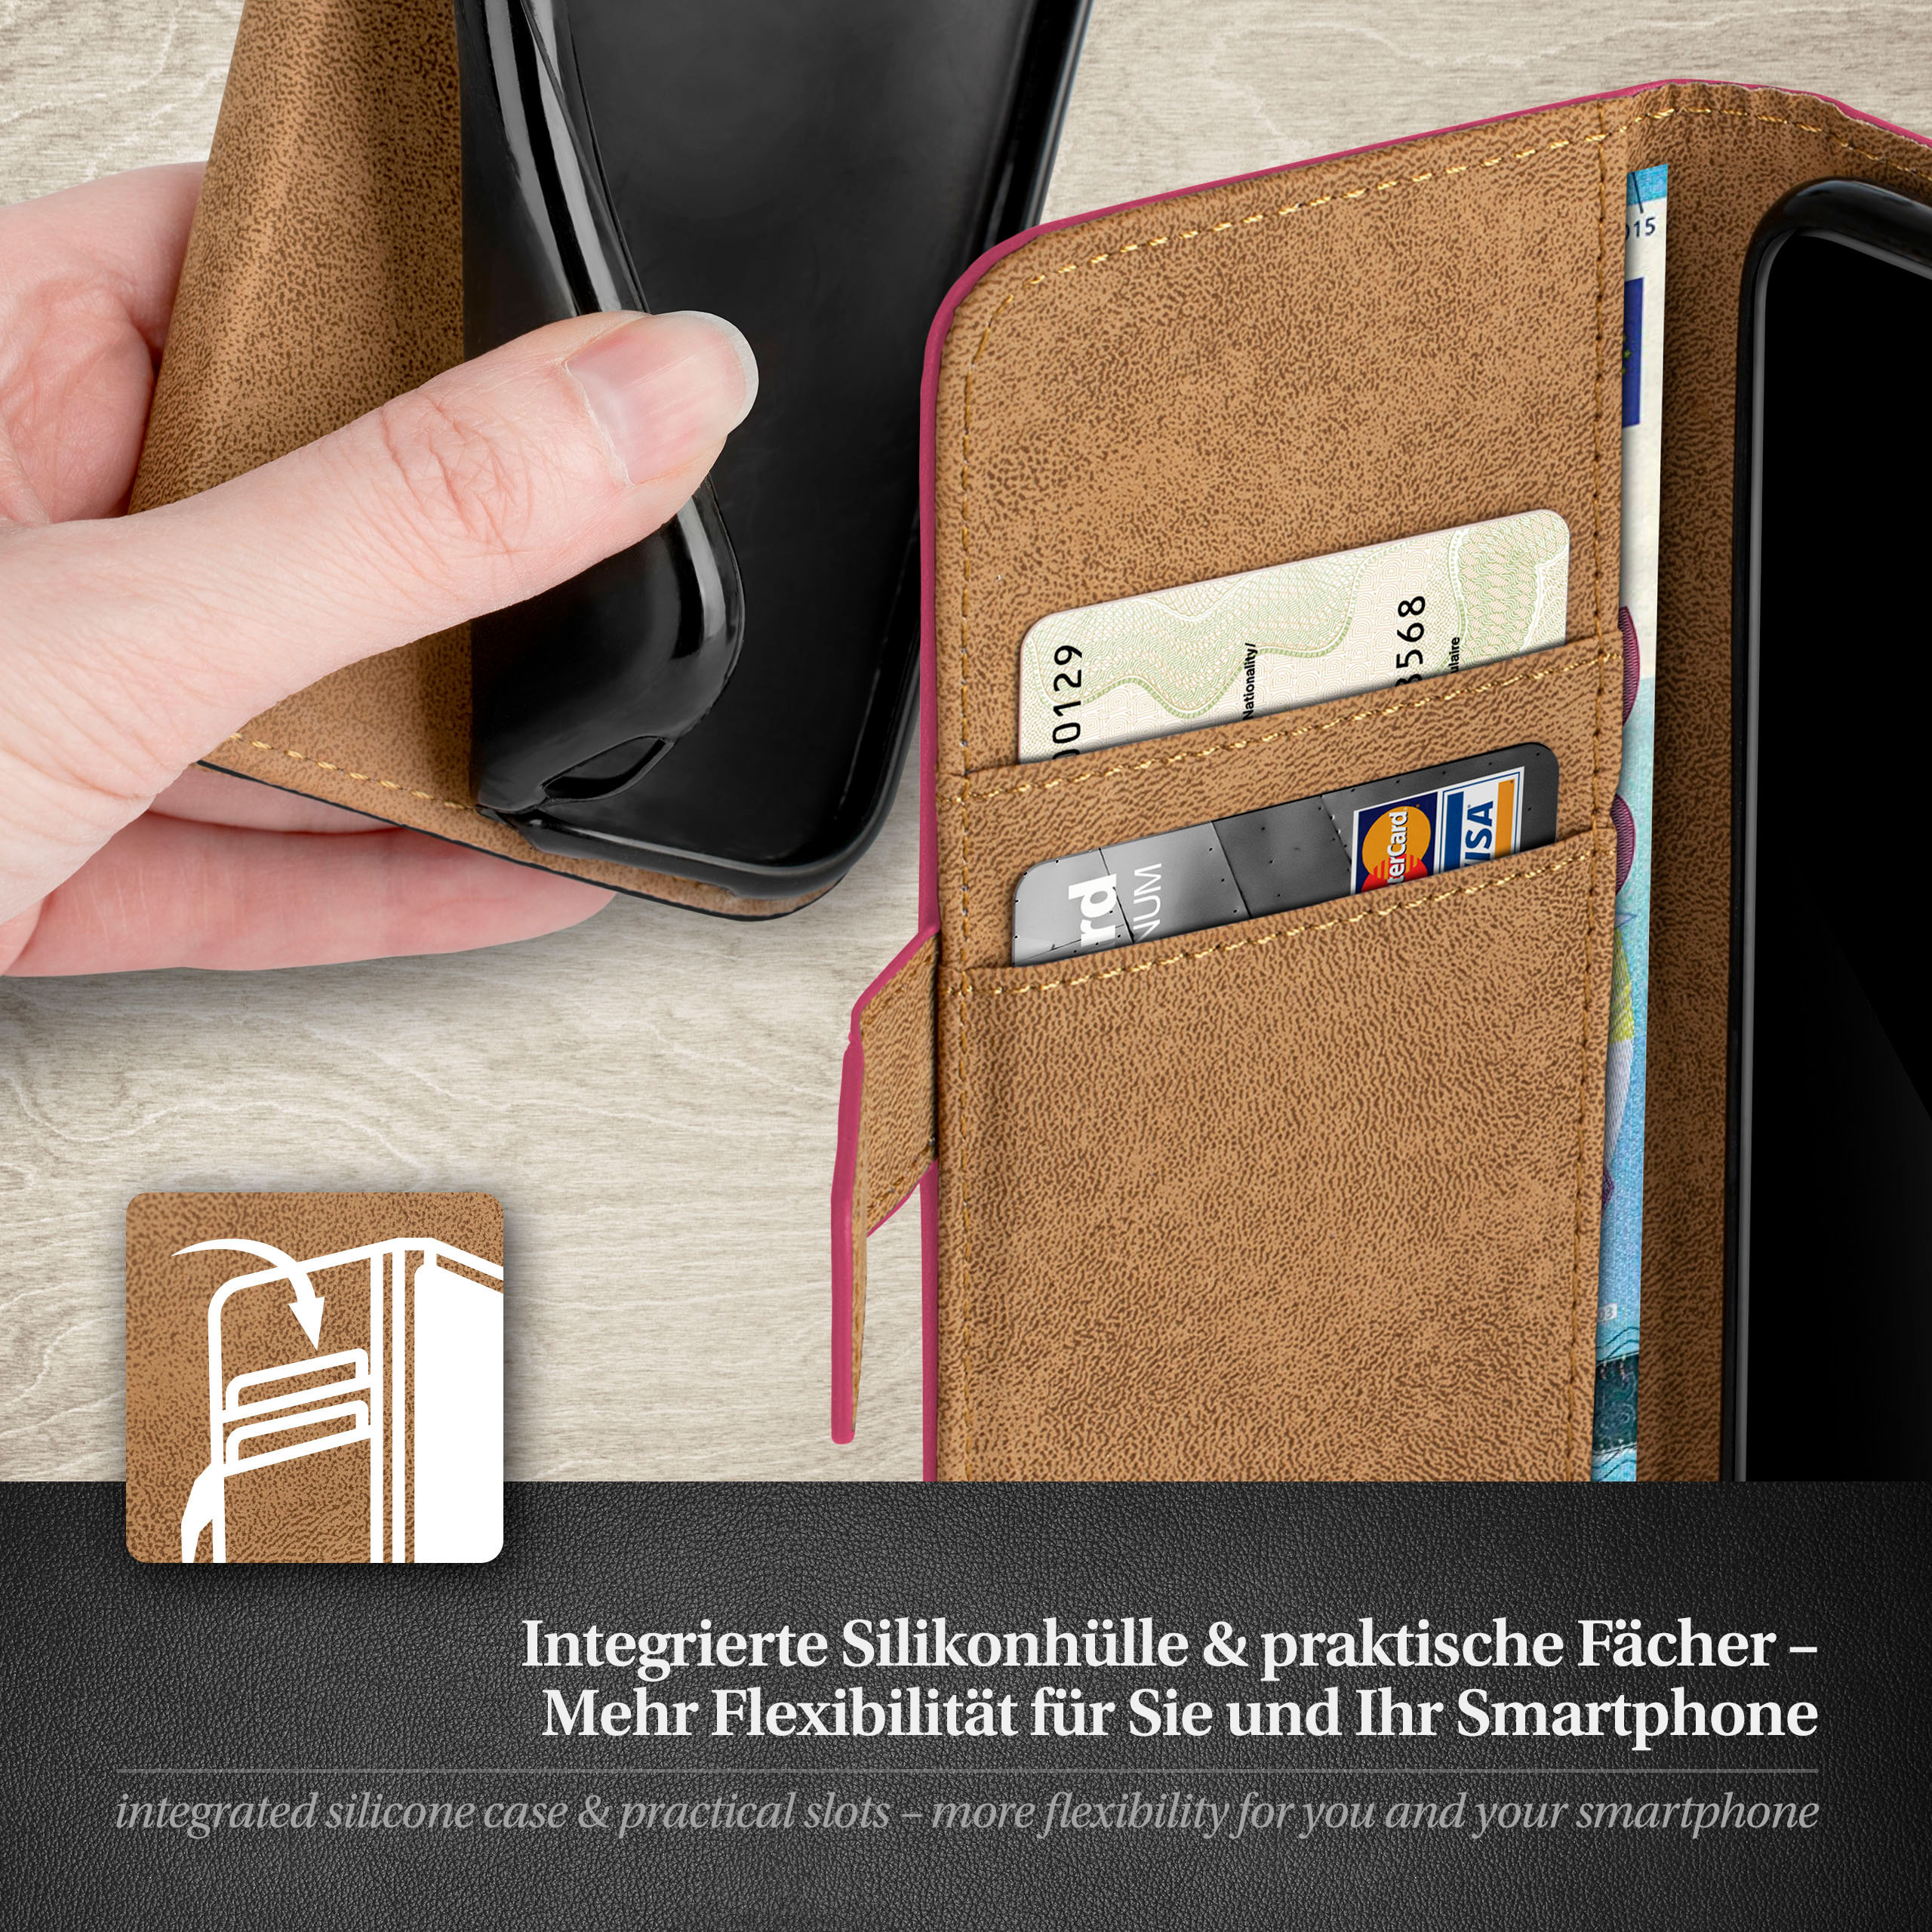 MOEX Book Case, Bookcover, Samsung, Berry-Fuchsia S7, Galaxy